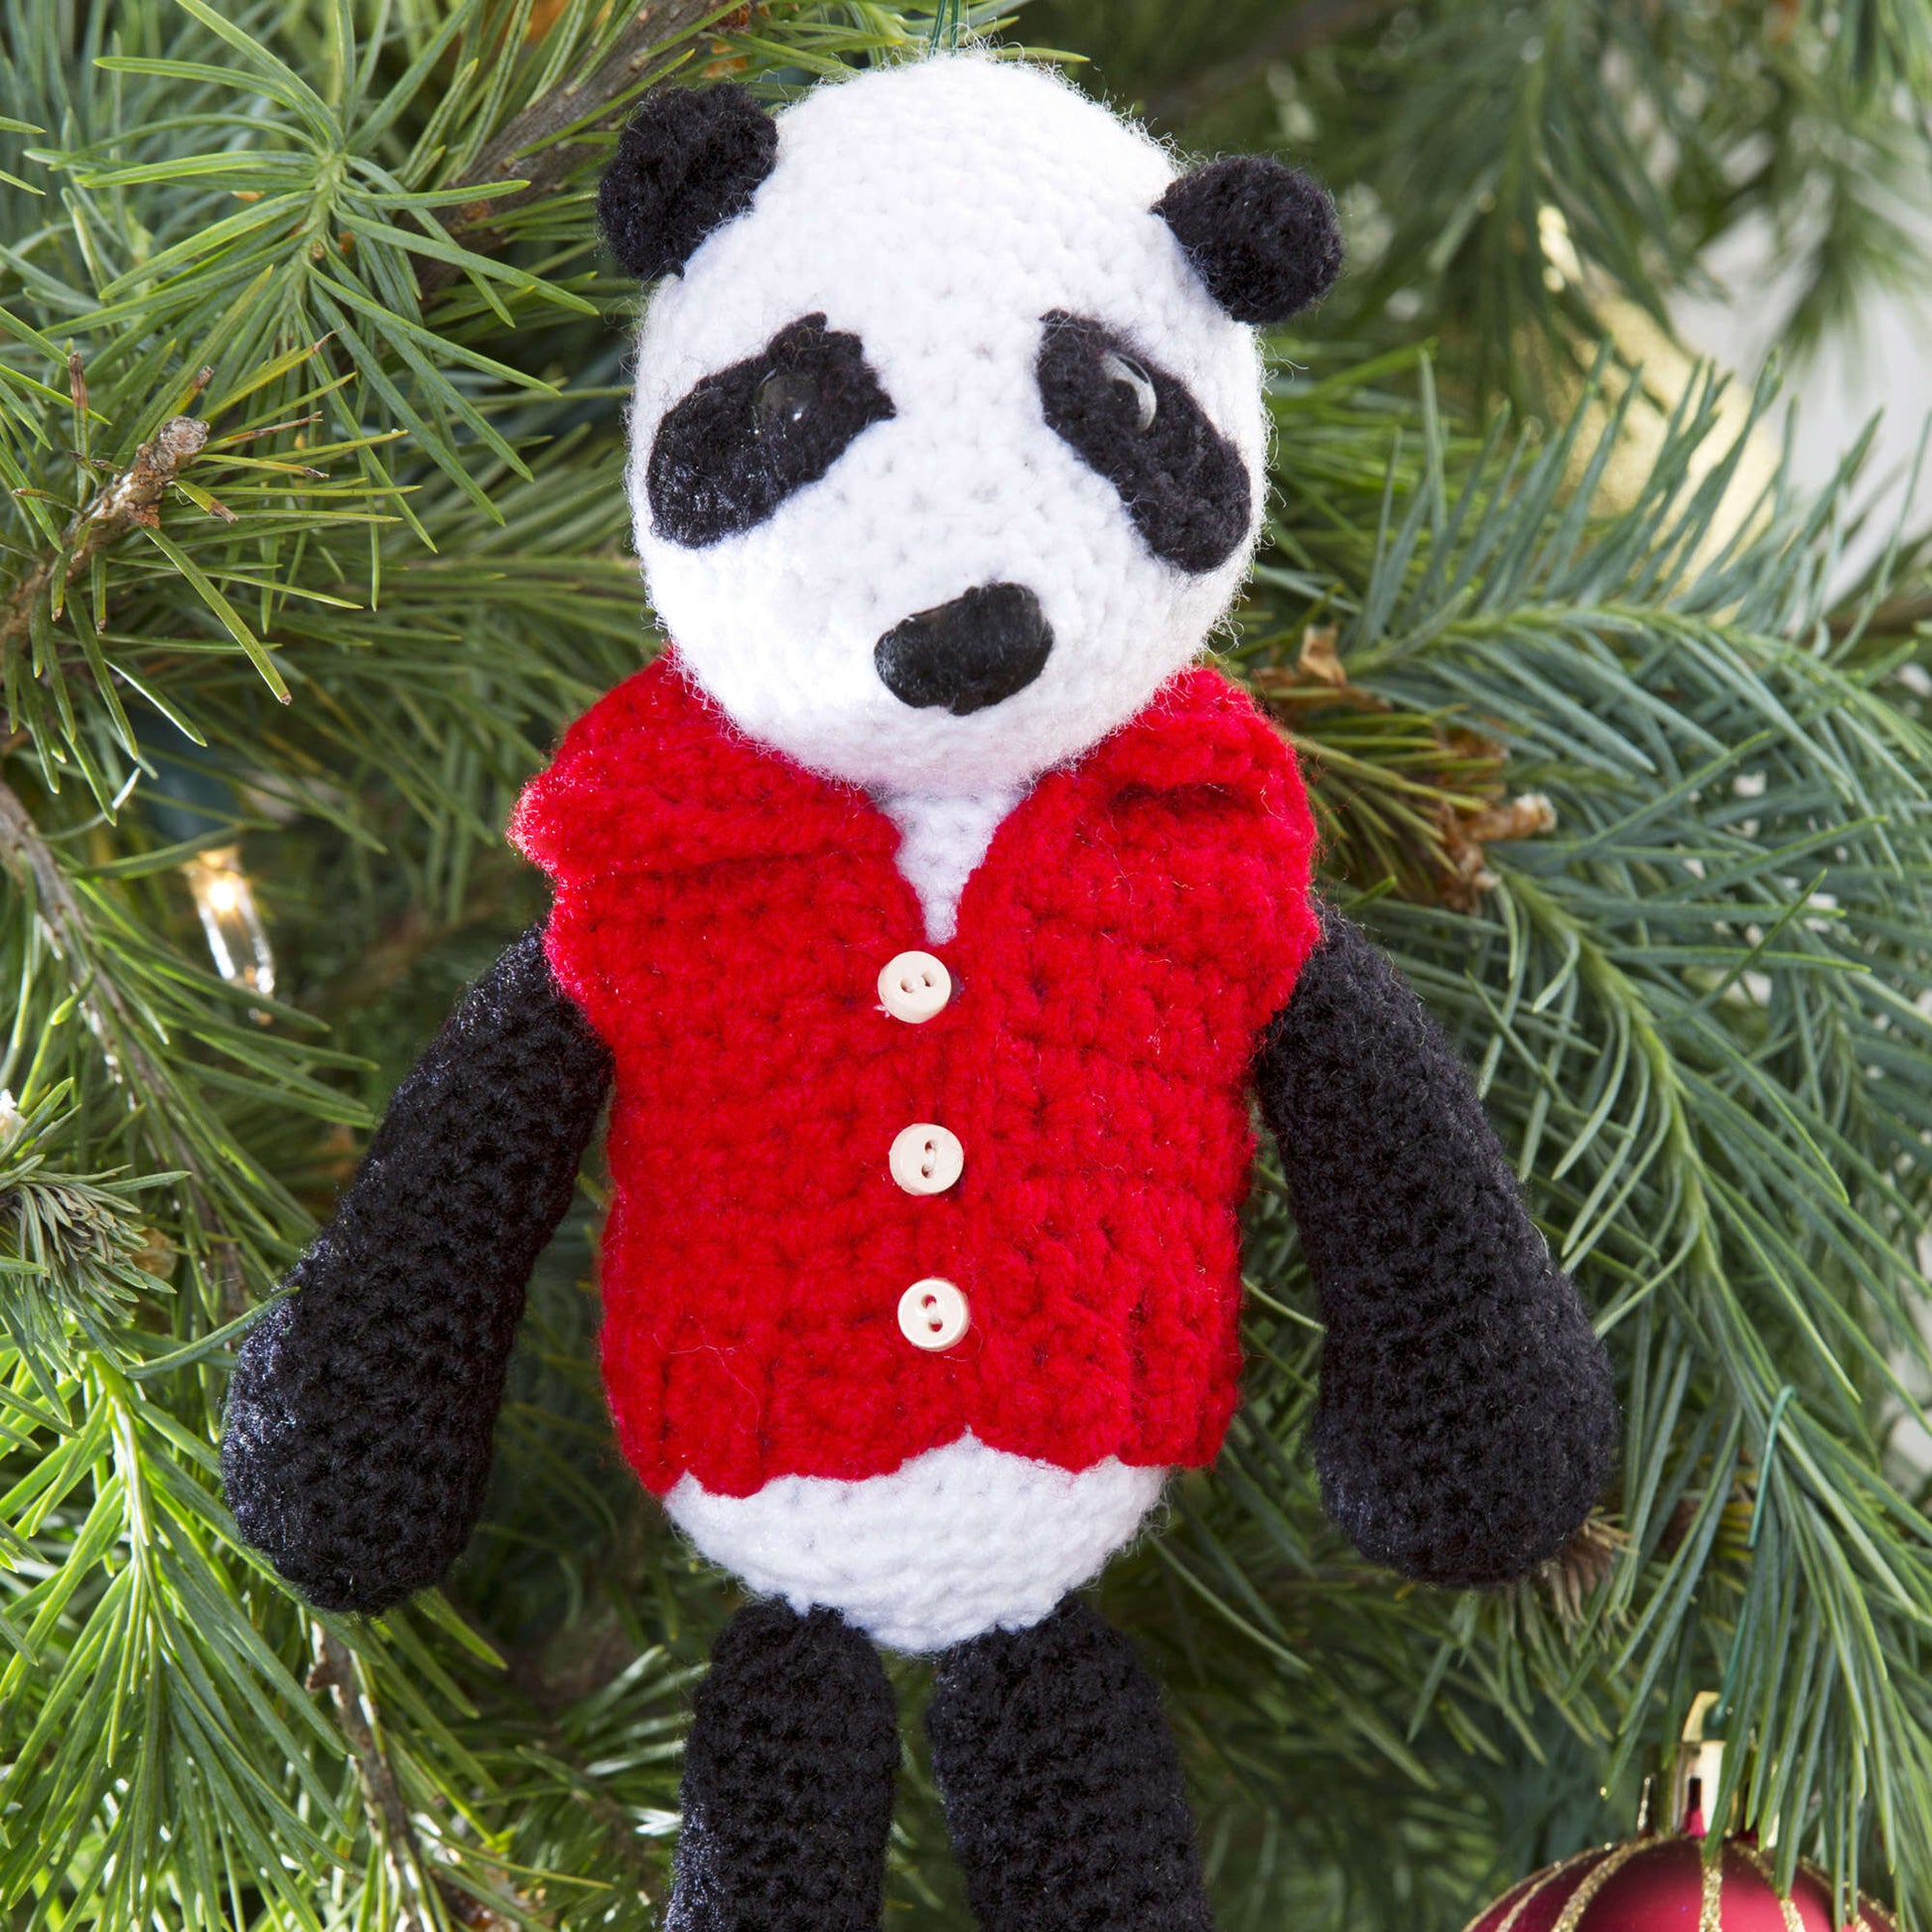 Free Red Heart Vested Panda Ornament Crochet Pattern